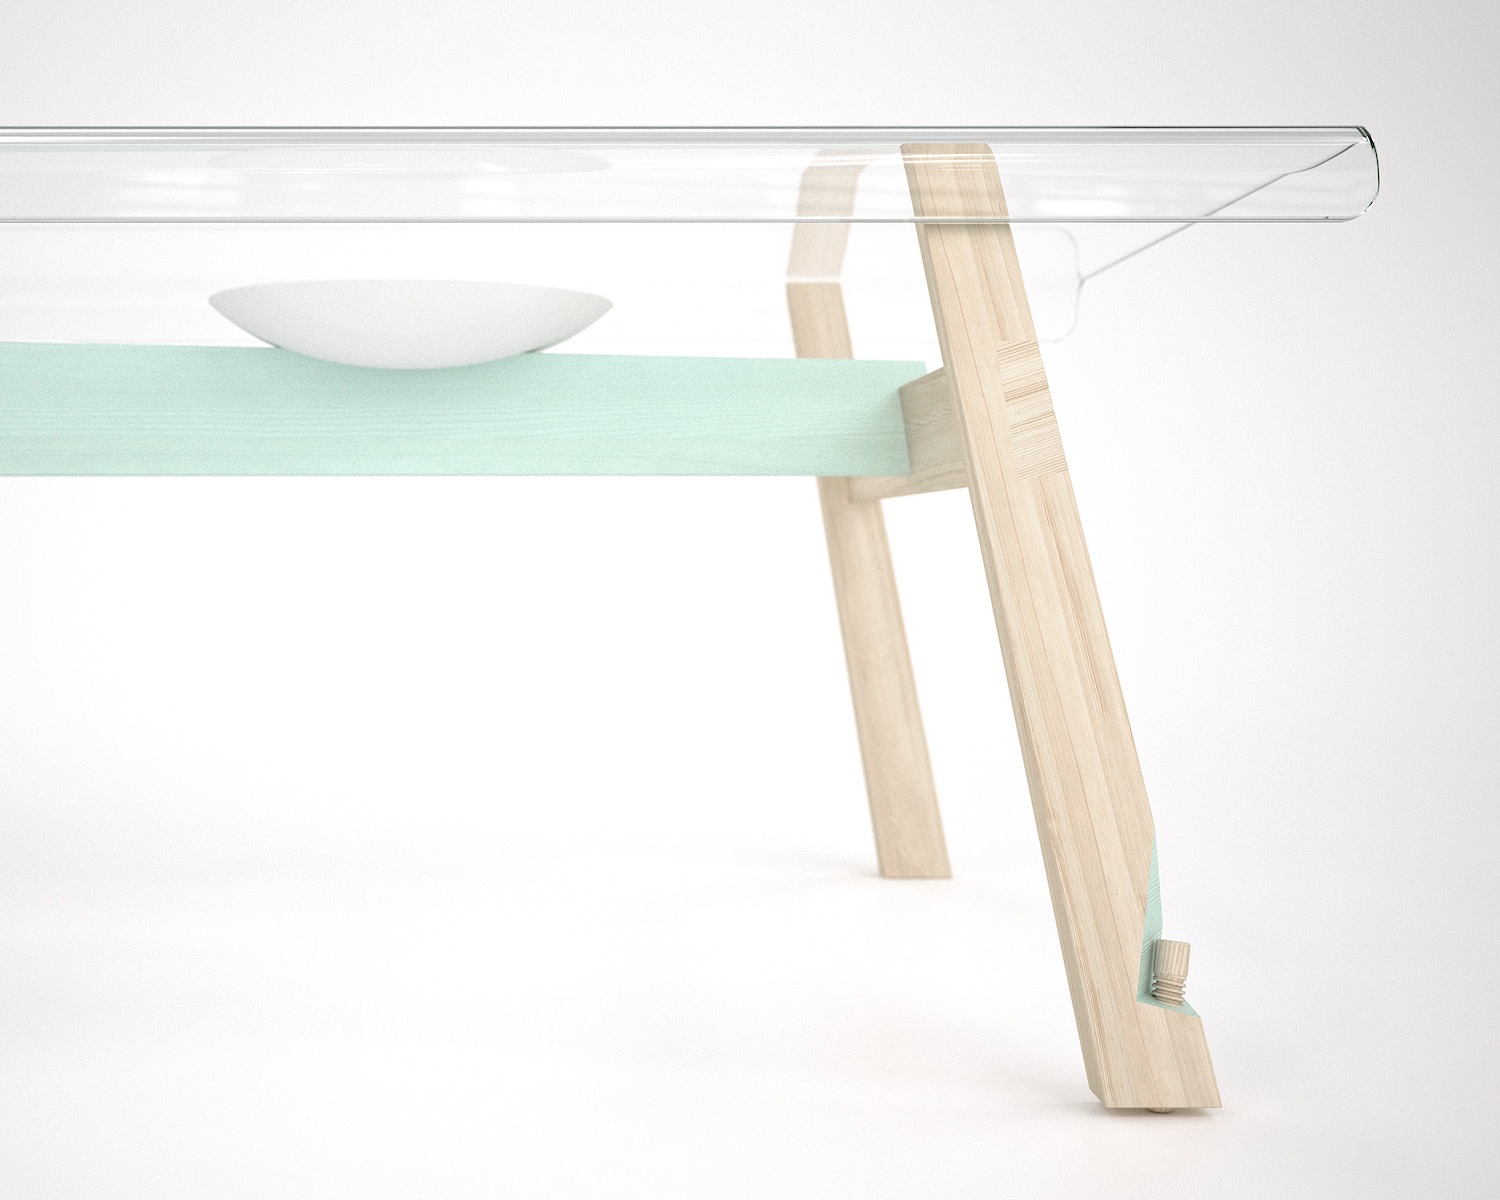 Table design and image by Francois Verhoeven -Fillie Verhoeven